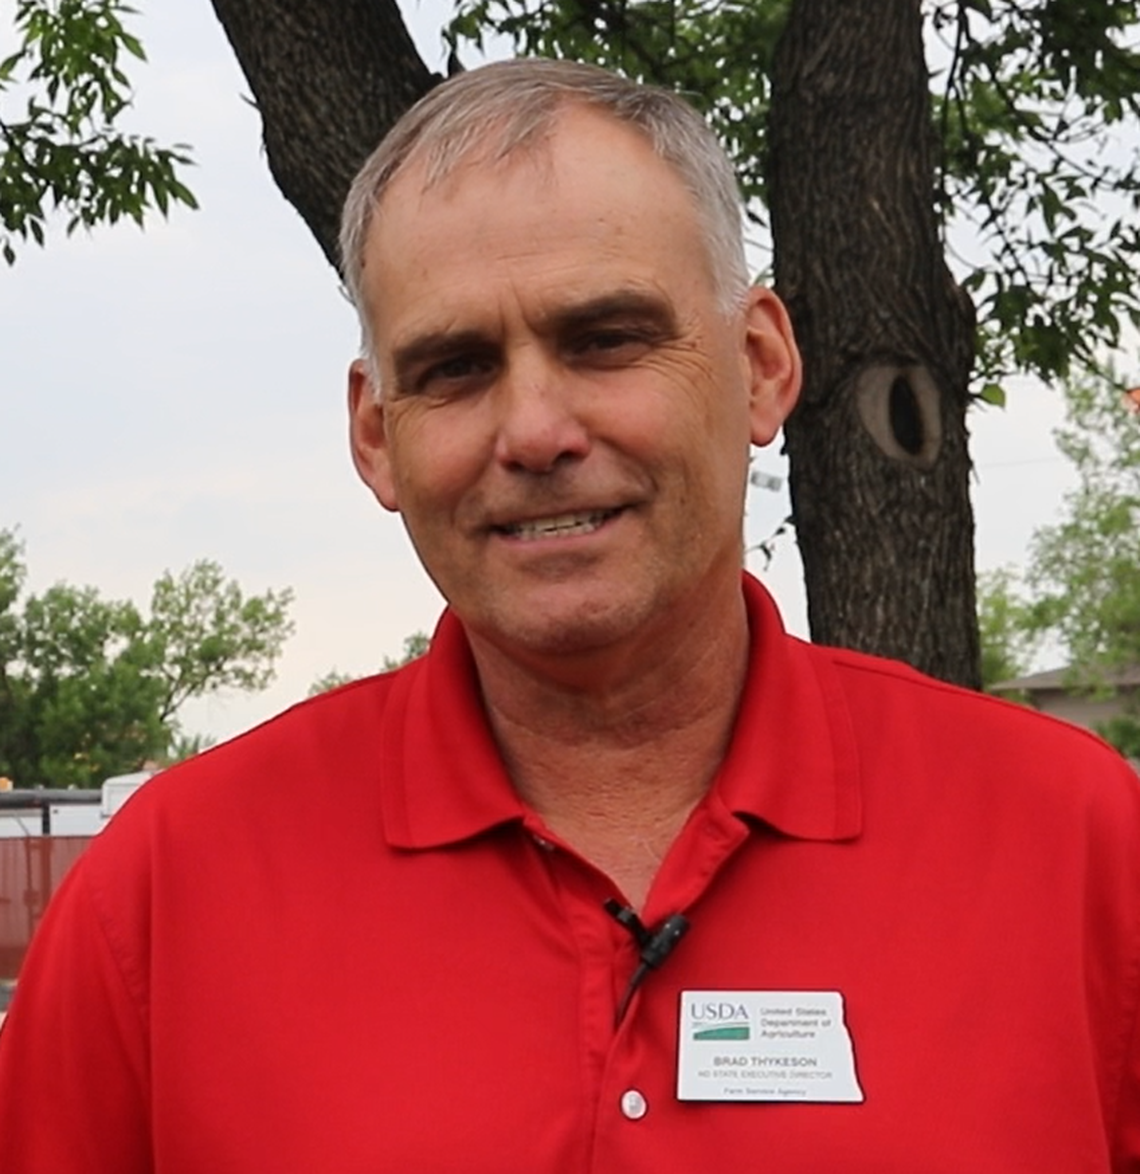 Brad Thykeson is the North Dakota state executive director for Farm Service Agency. (Jenny Schlecht / Agweek)